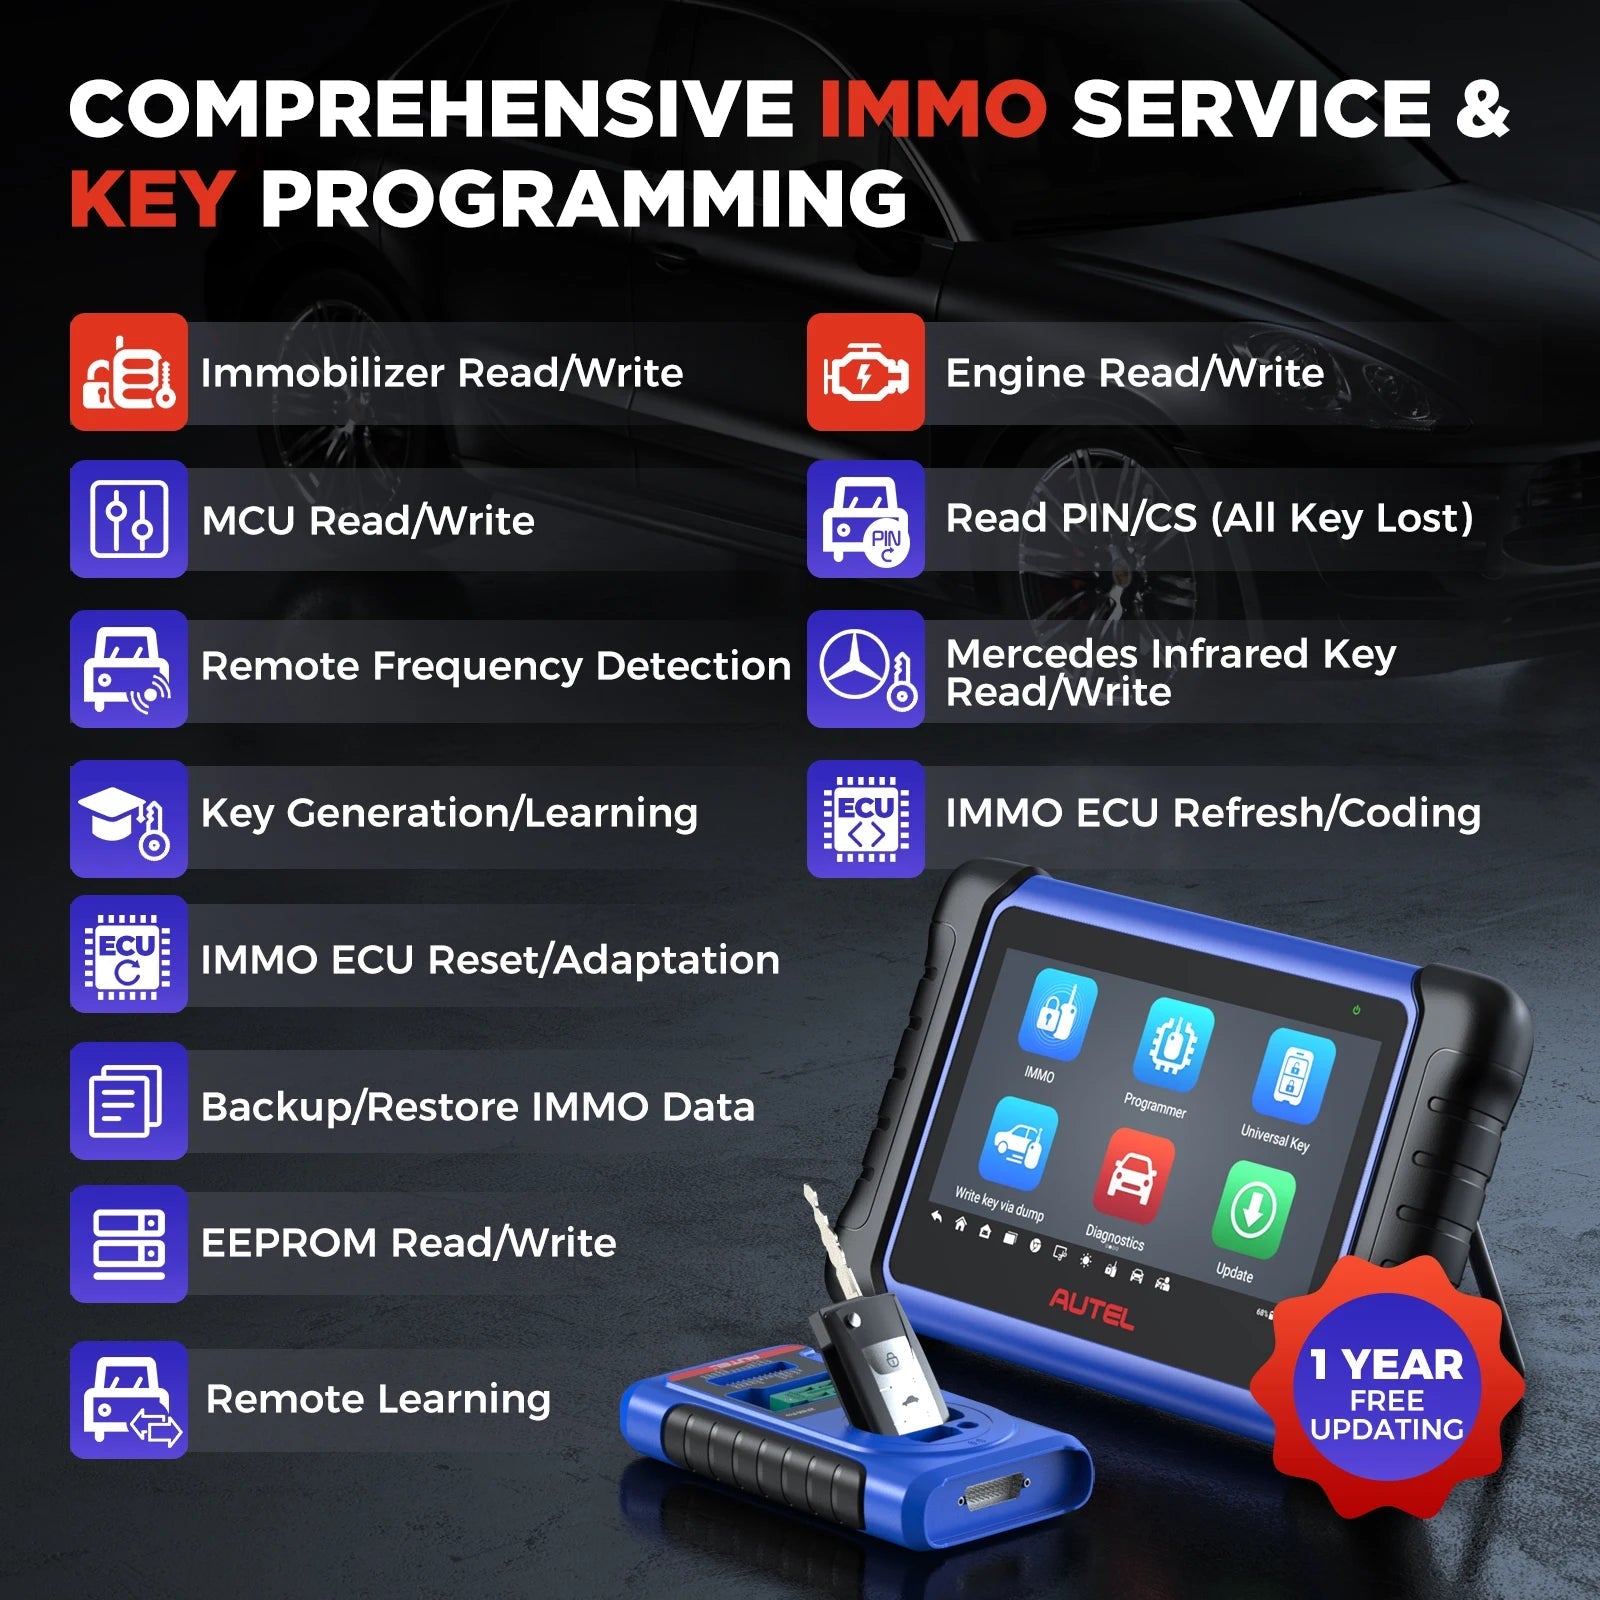 Autel MaxiIM IM508S XP400PRO IMMO Programming Diagnostic Tool OBD2 Auto Automotive Scanner All-in-One Key Programmer PK IM608 - Dynamex